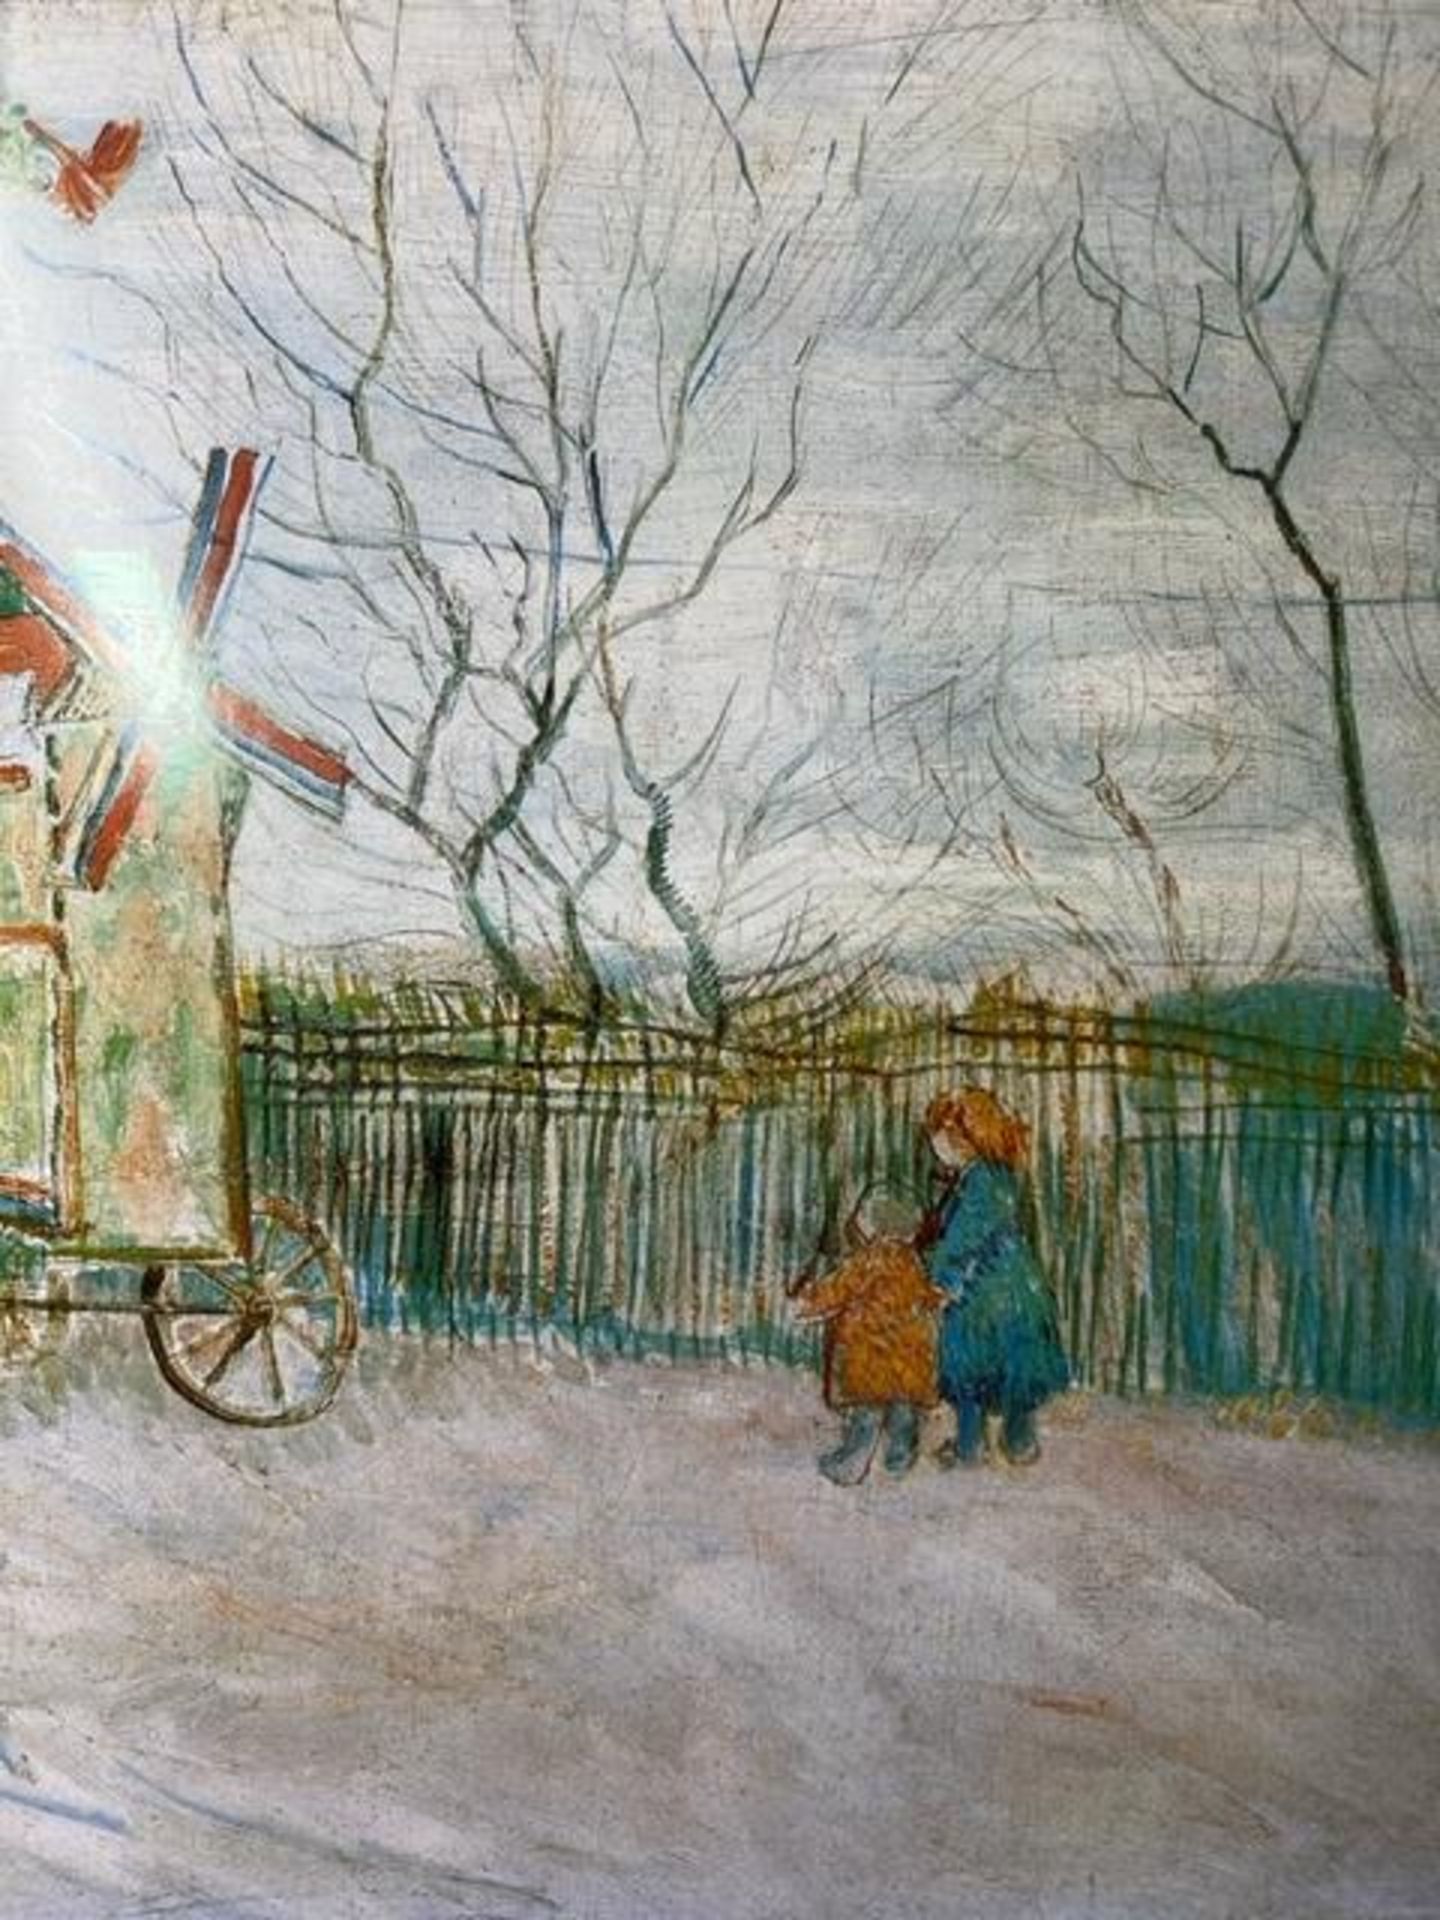 Vincent van Gogh "Street Scene" Print.